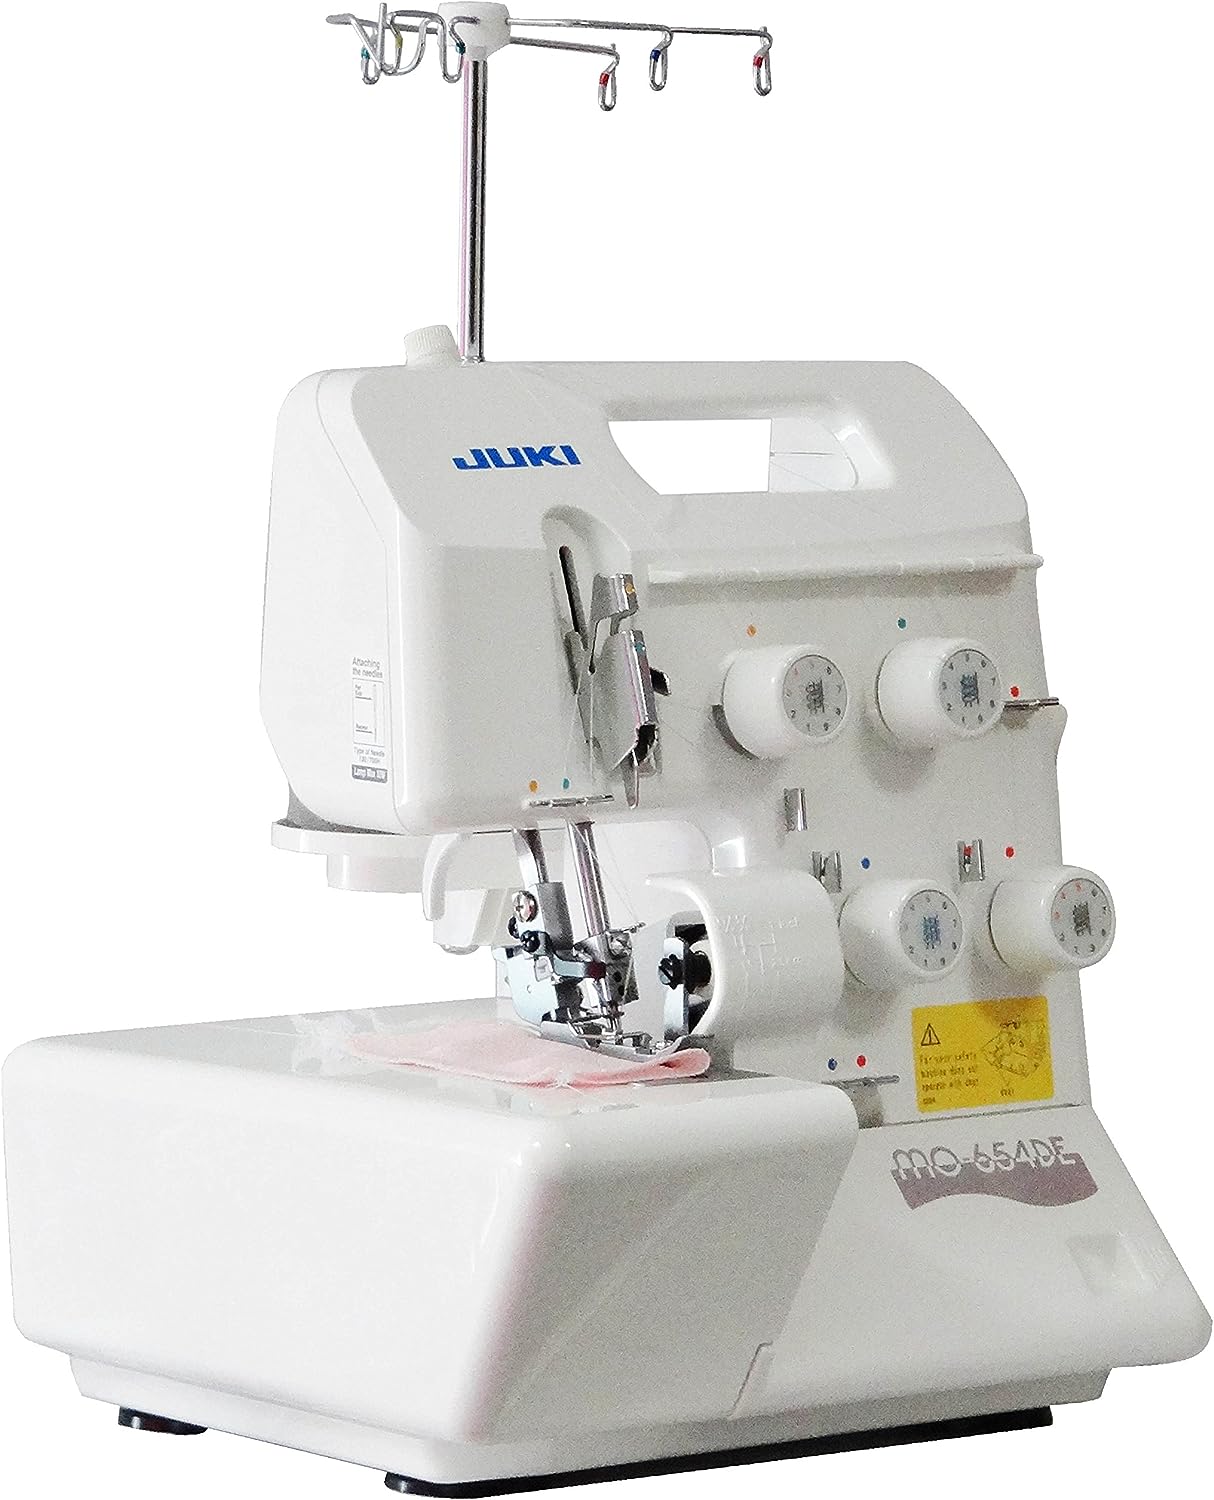 JUKI MO654DE Serger Sewing Machine review